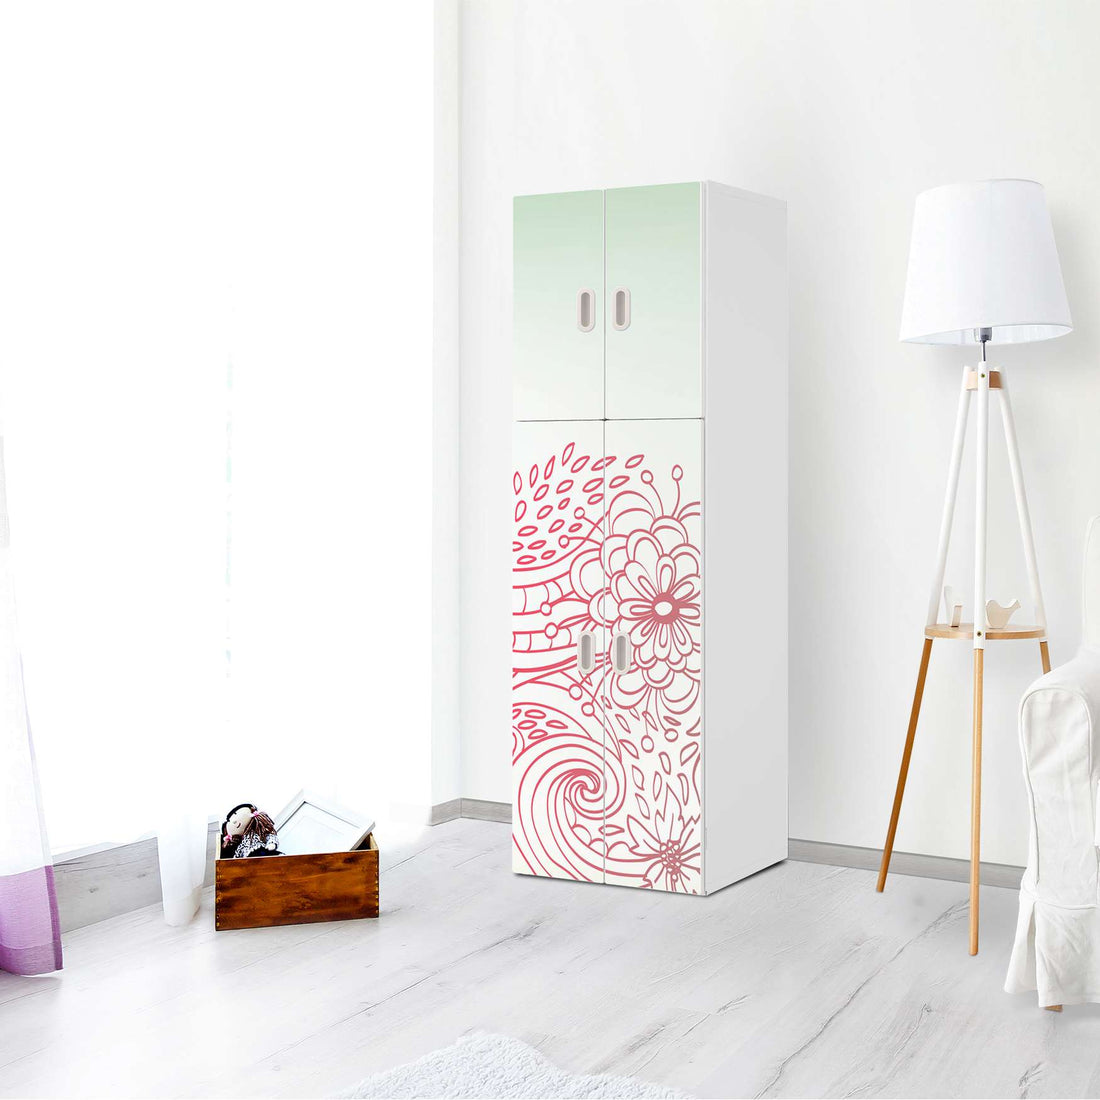 Selbstklebende Folie Floral Doodle - IKEA Stuva / Fritids kombiniert - 2 große Türen und 2 kleine Türen - Kinderzimmer